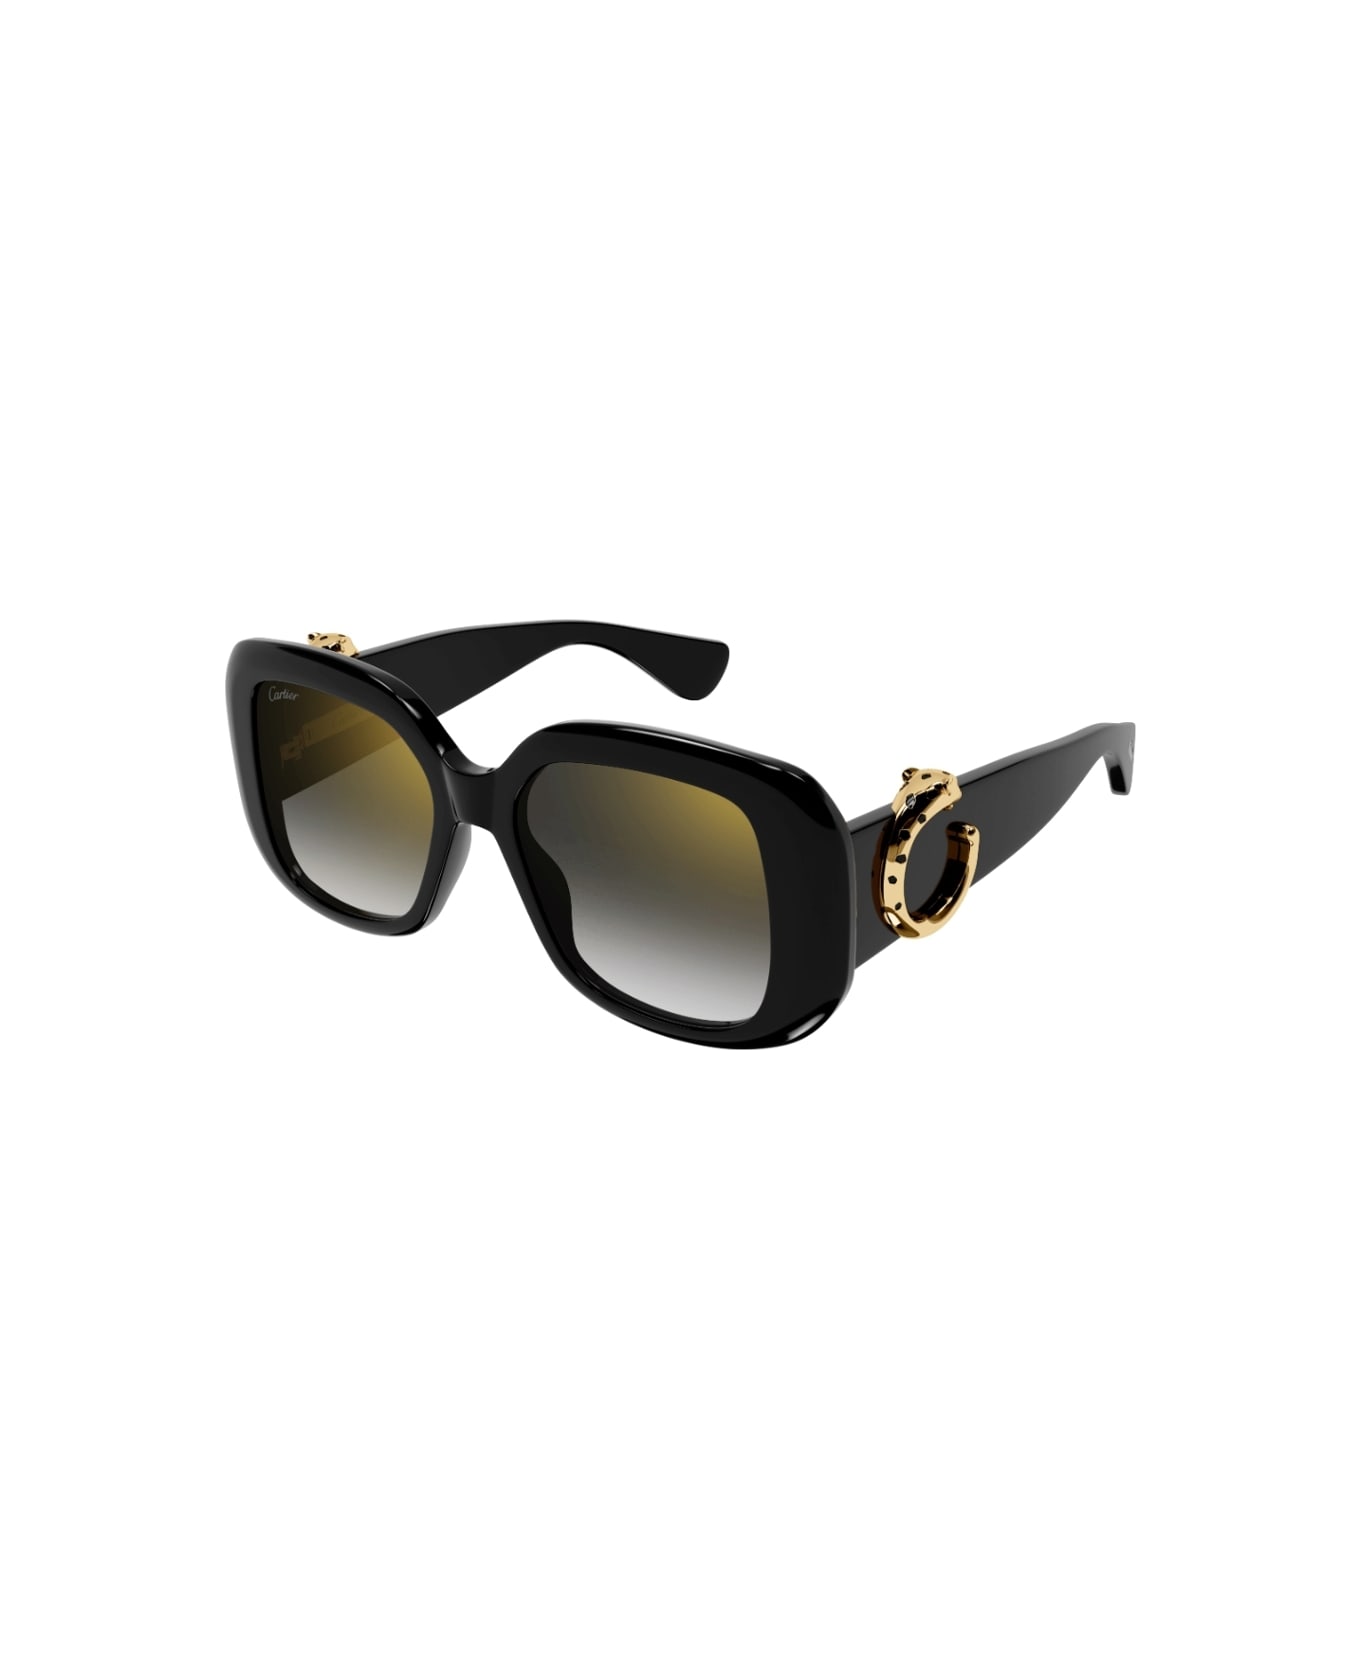 Cartier Eyewear CT0471s 001 Sunglasses